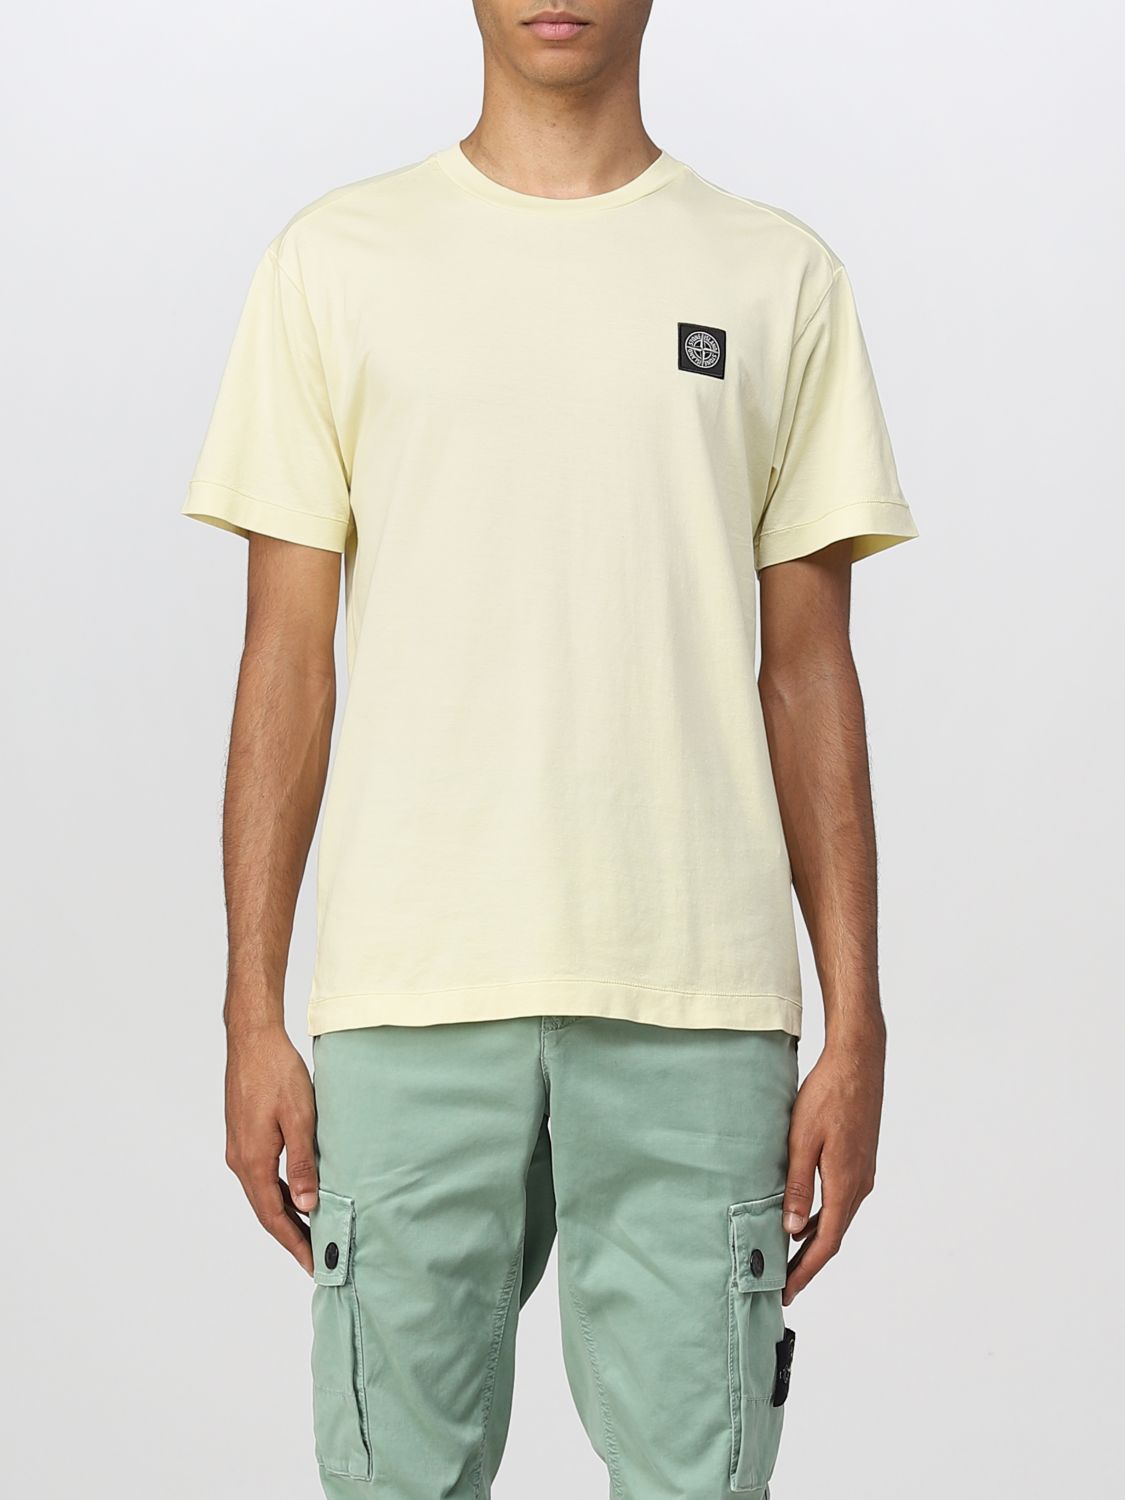 T-shirt Stone Island: Stone Island t-shirt for men straw yellow 1